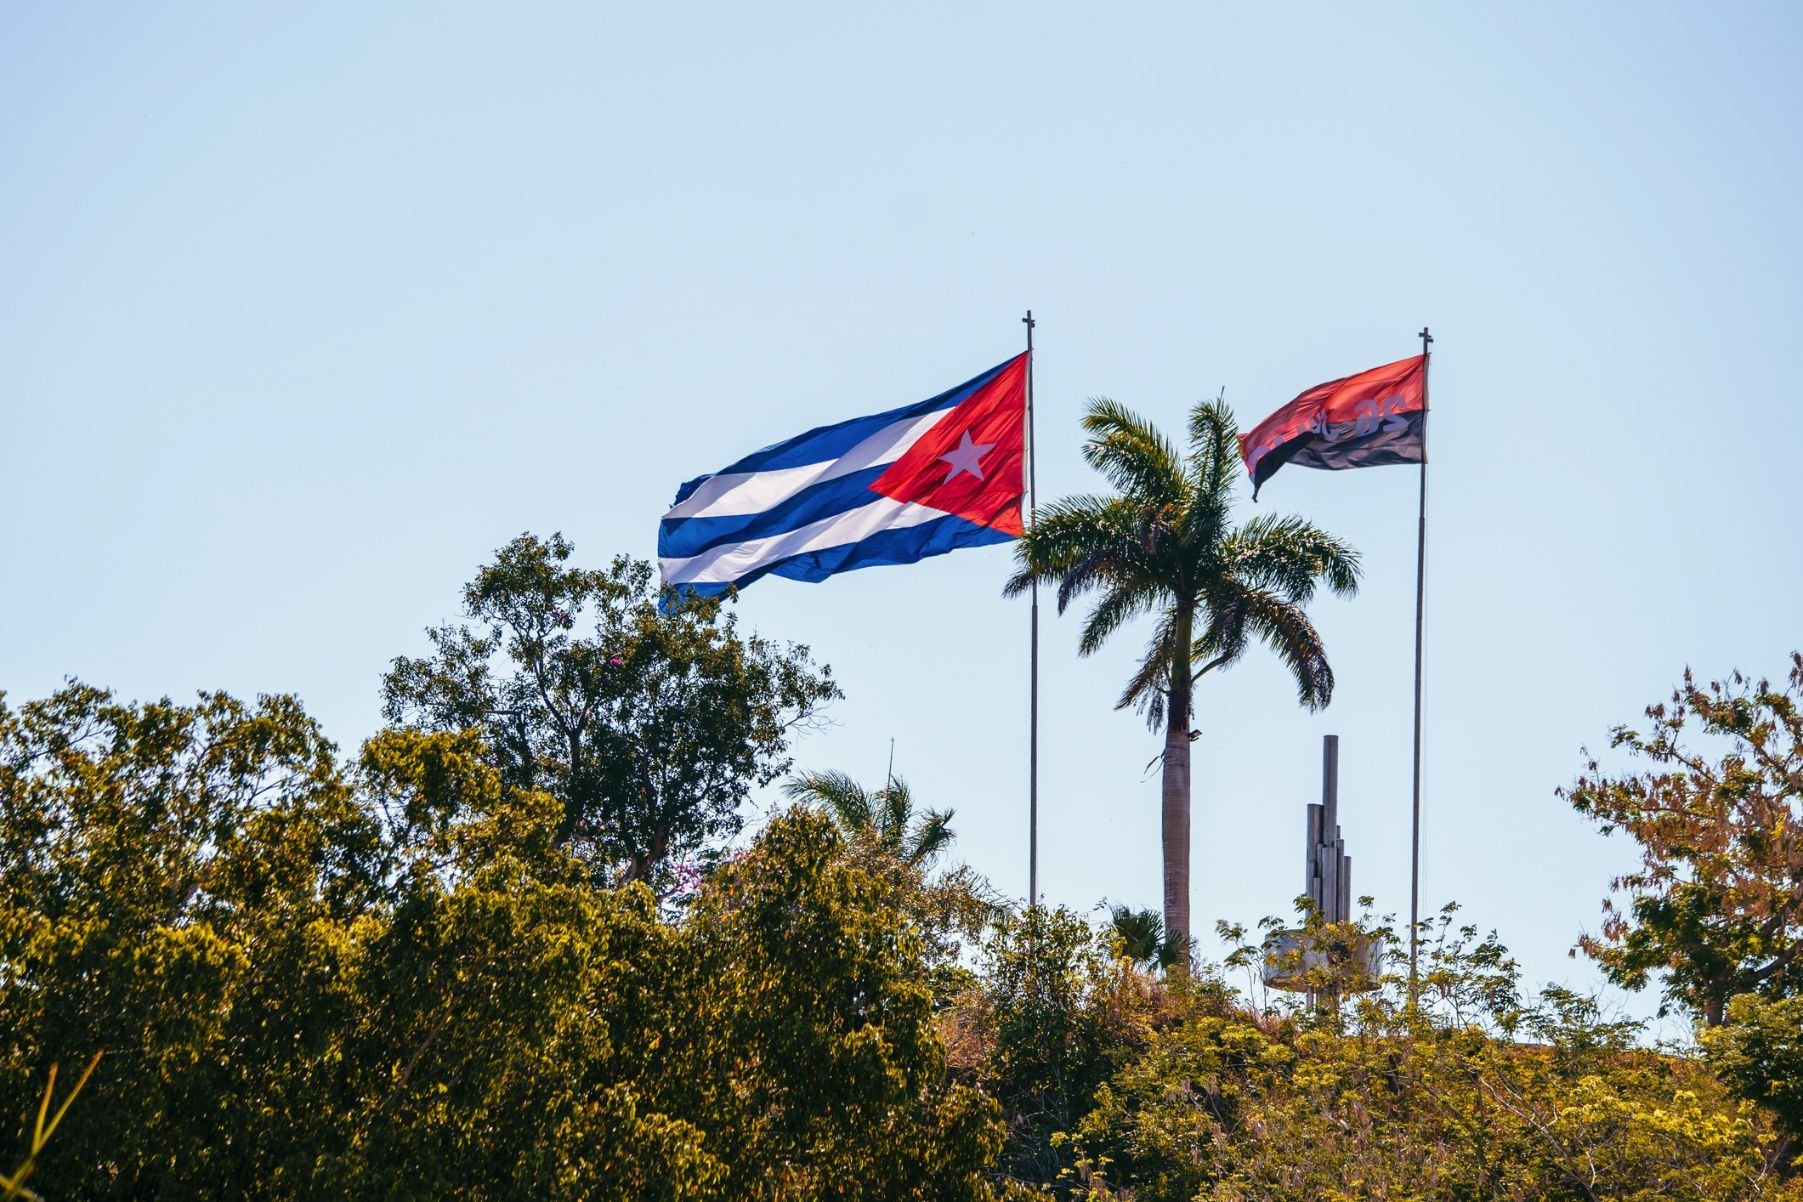 The Green Revolution: How Cuba Became an Accidental Eden